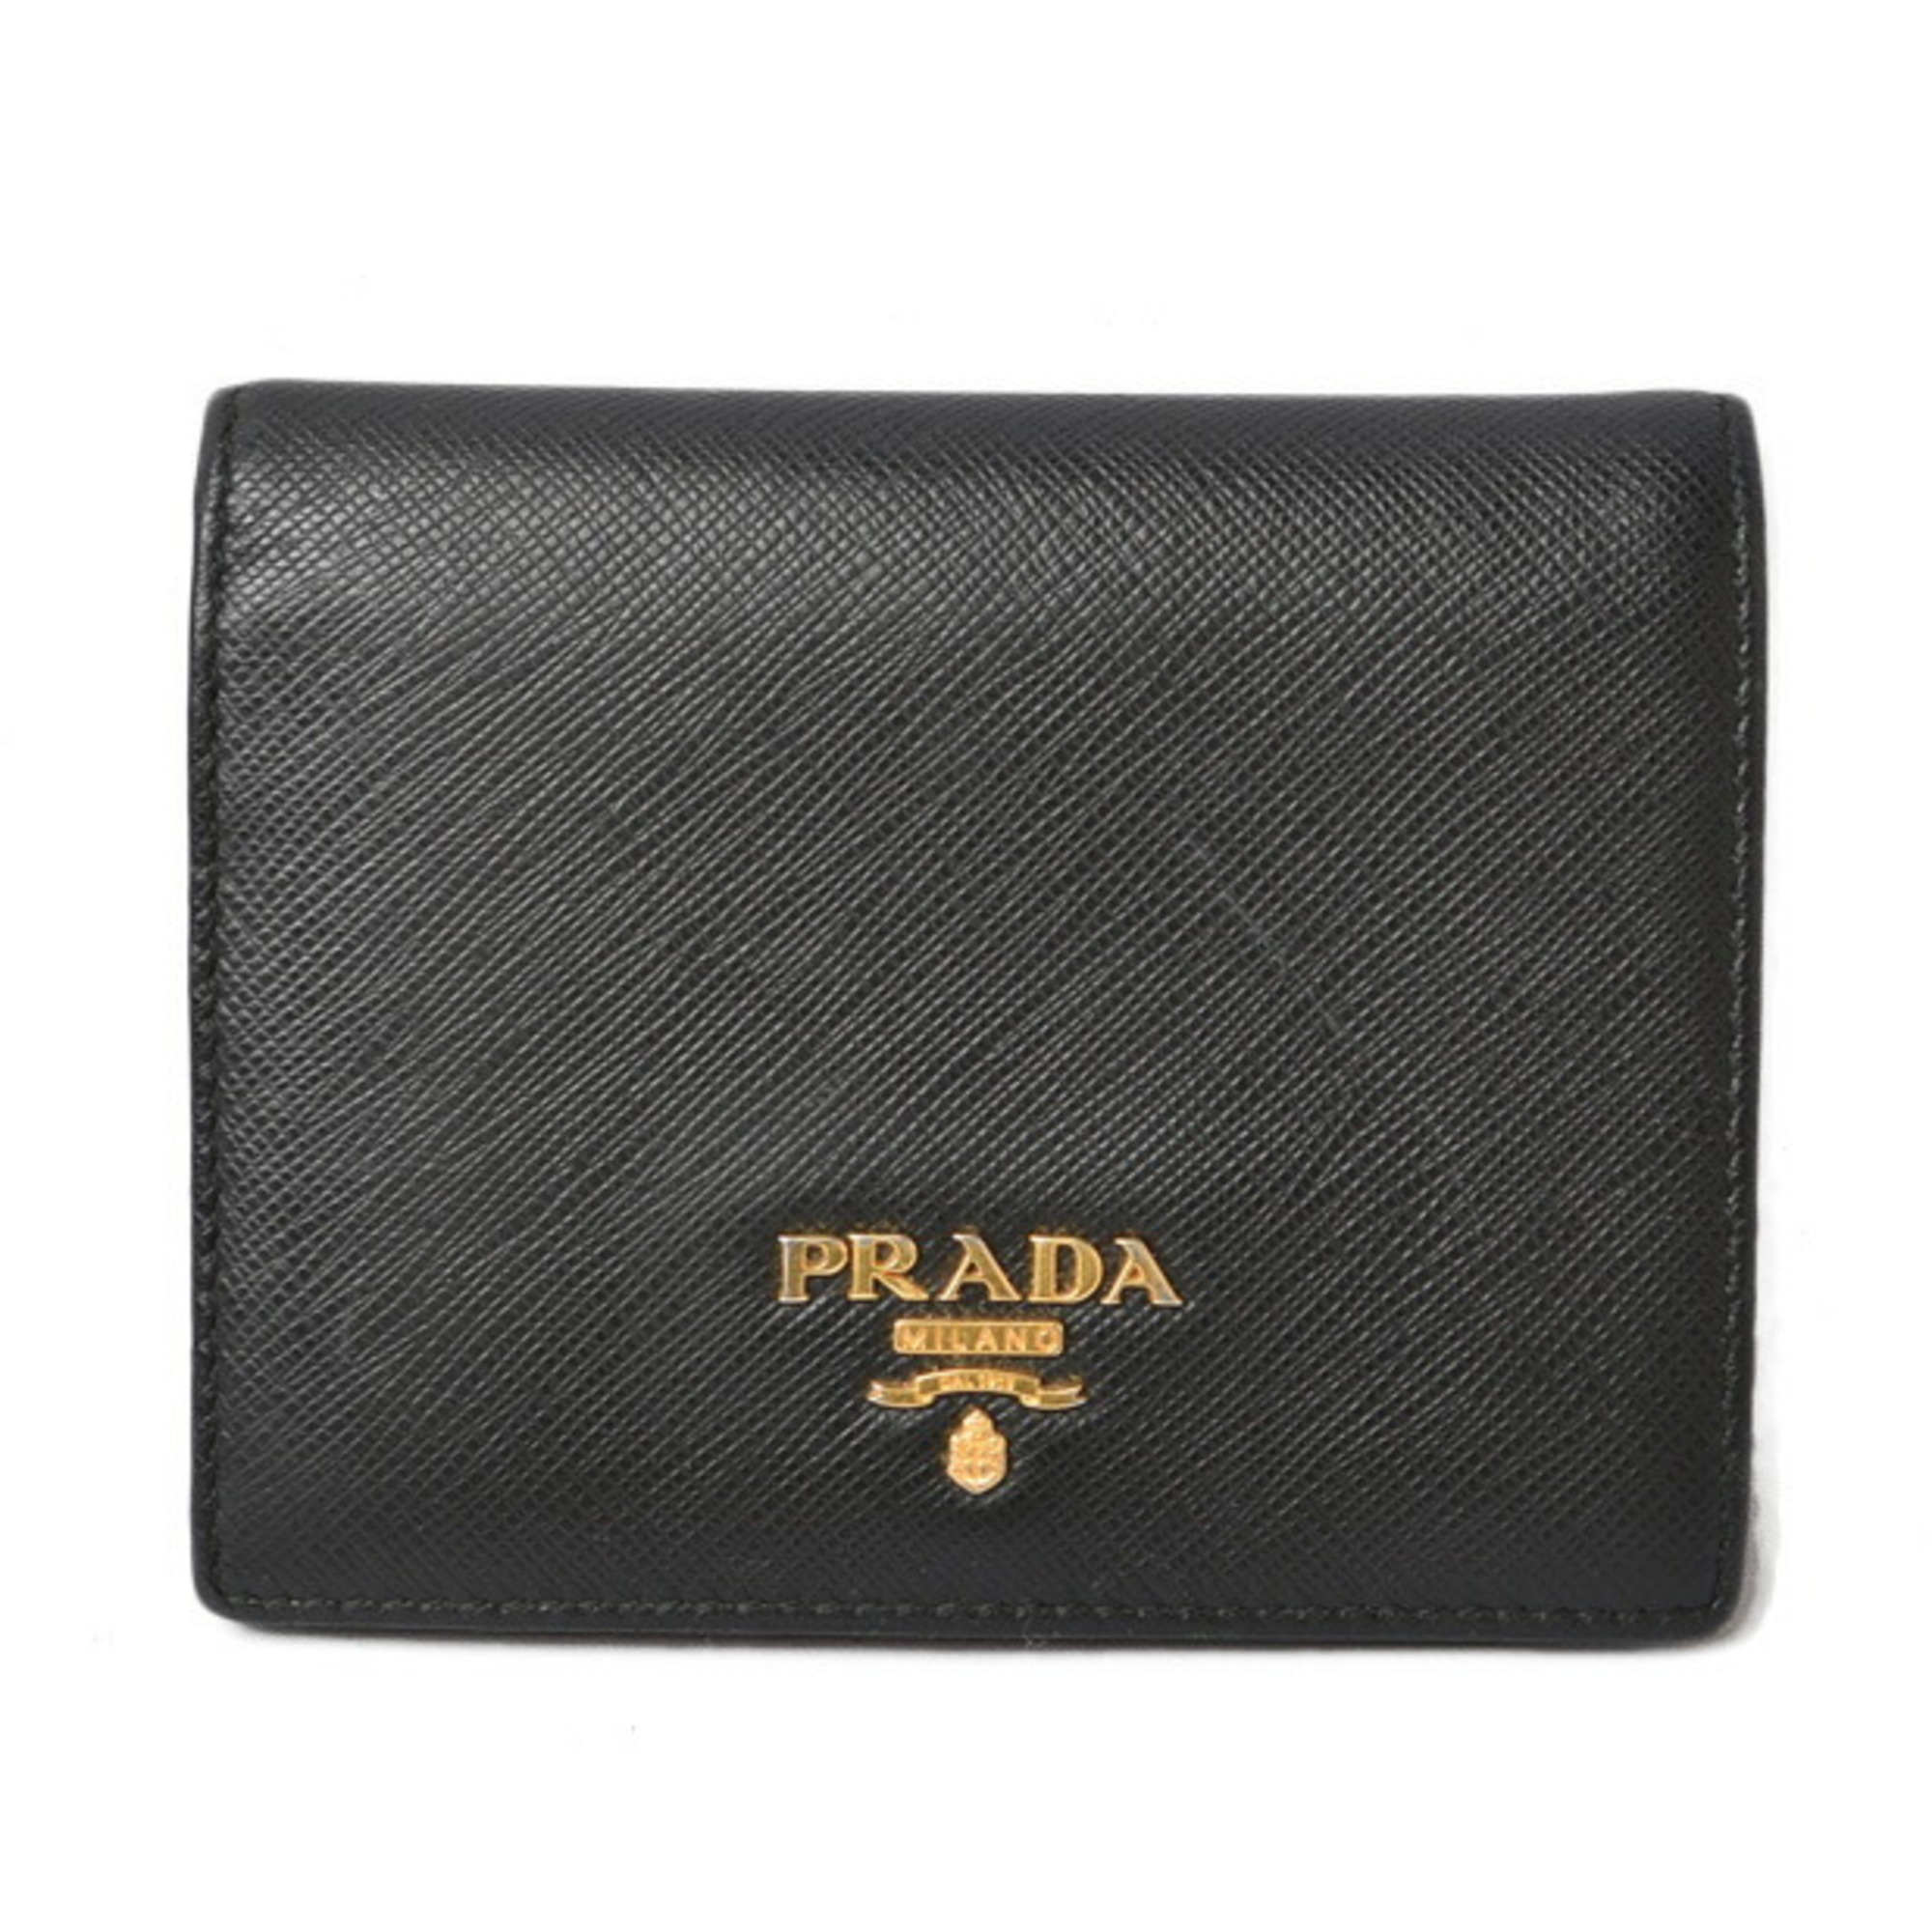 Prada wallet PRADA folding 1MV204 SAFFIANO NERO black